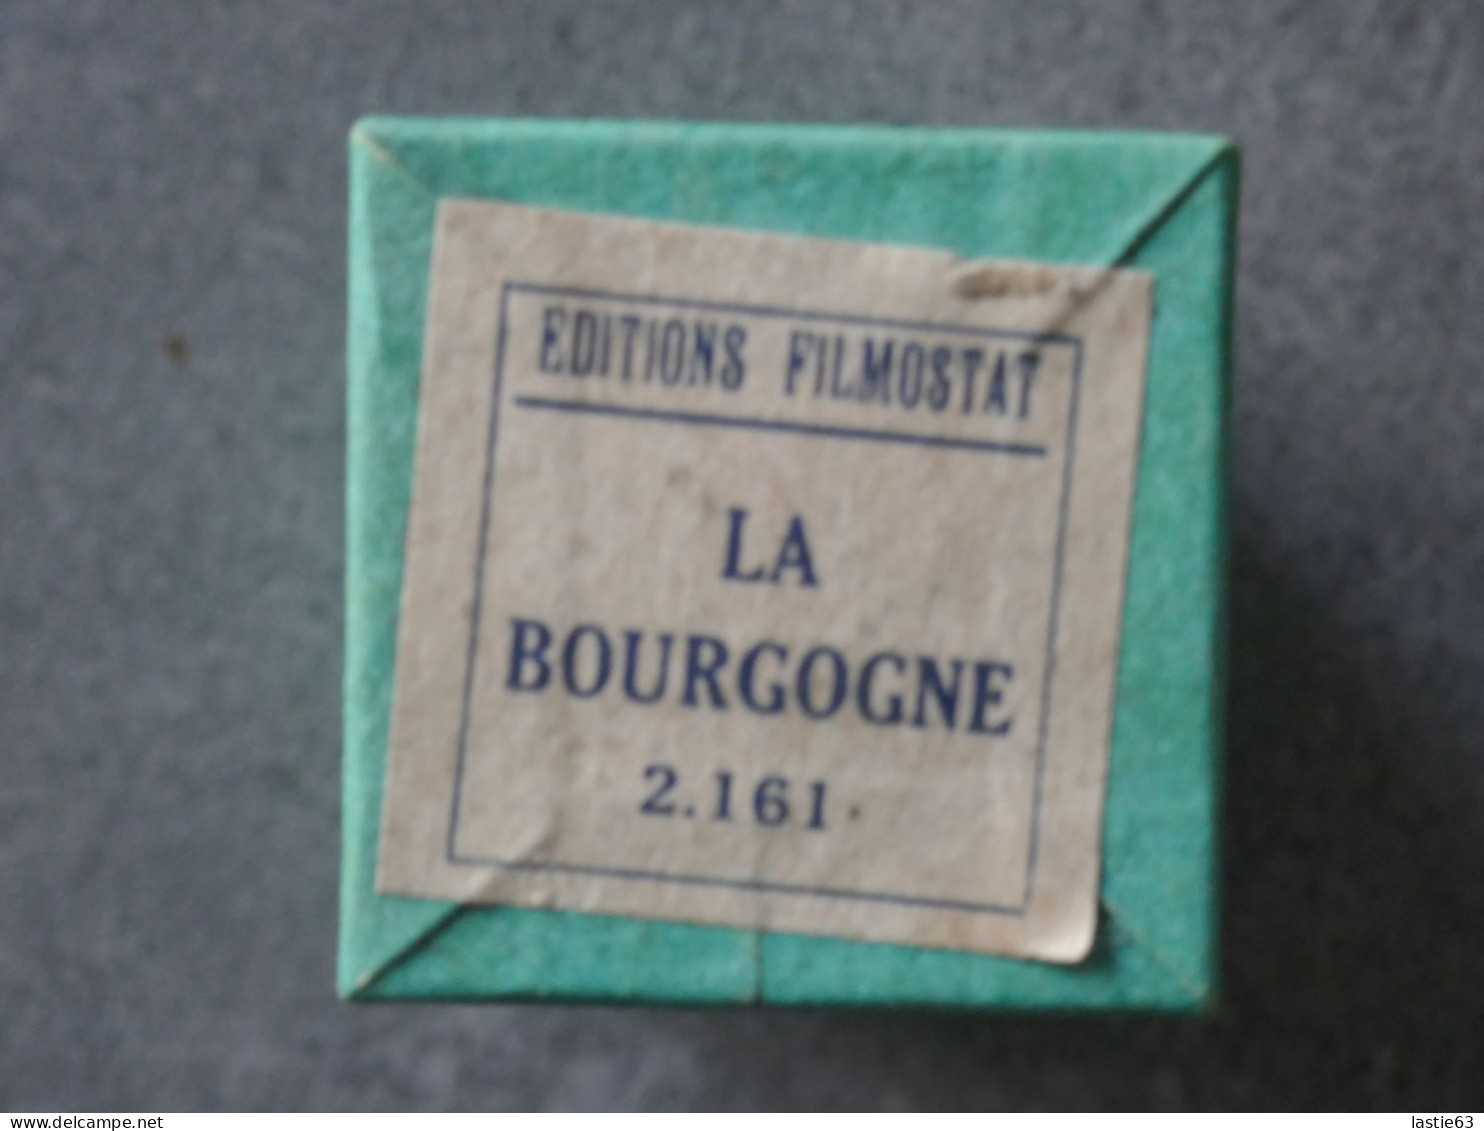 Film Fixe      LA  BOURGOGNE   Filmostat  2.161 - 35mm -16mm - 9,5+8+S8mm Film Rolls